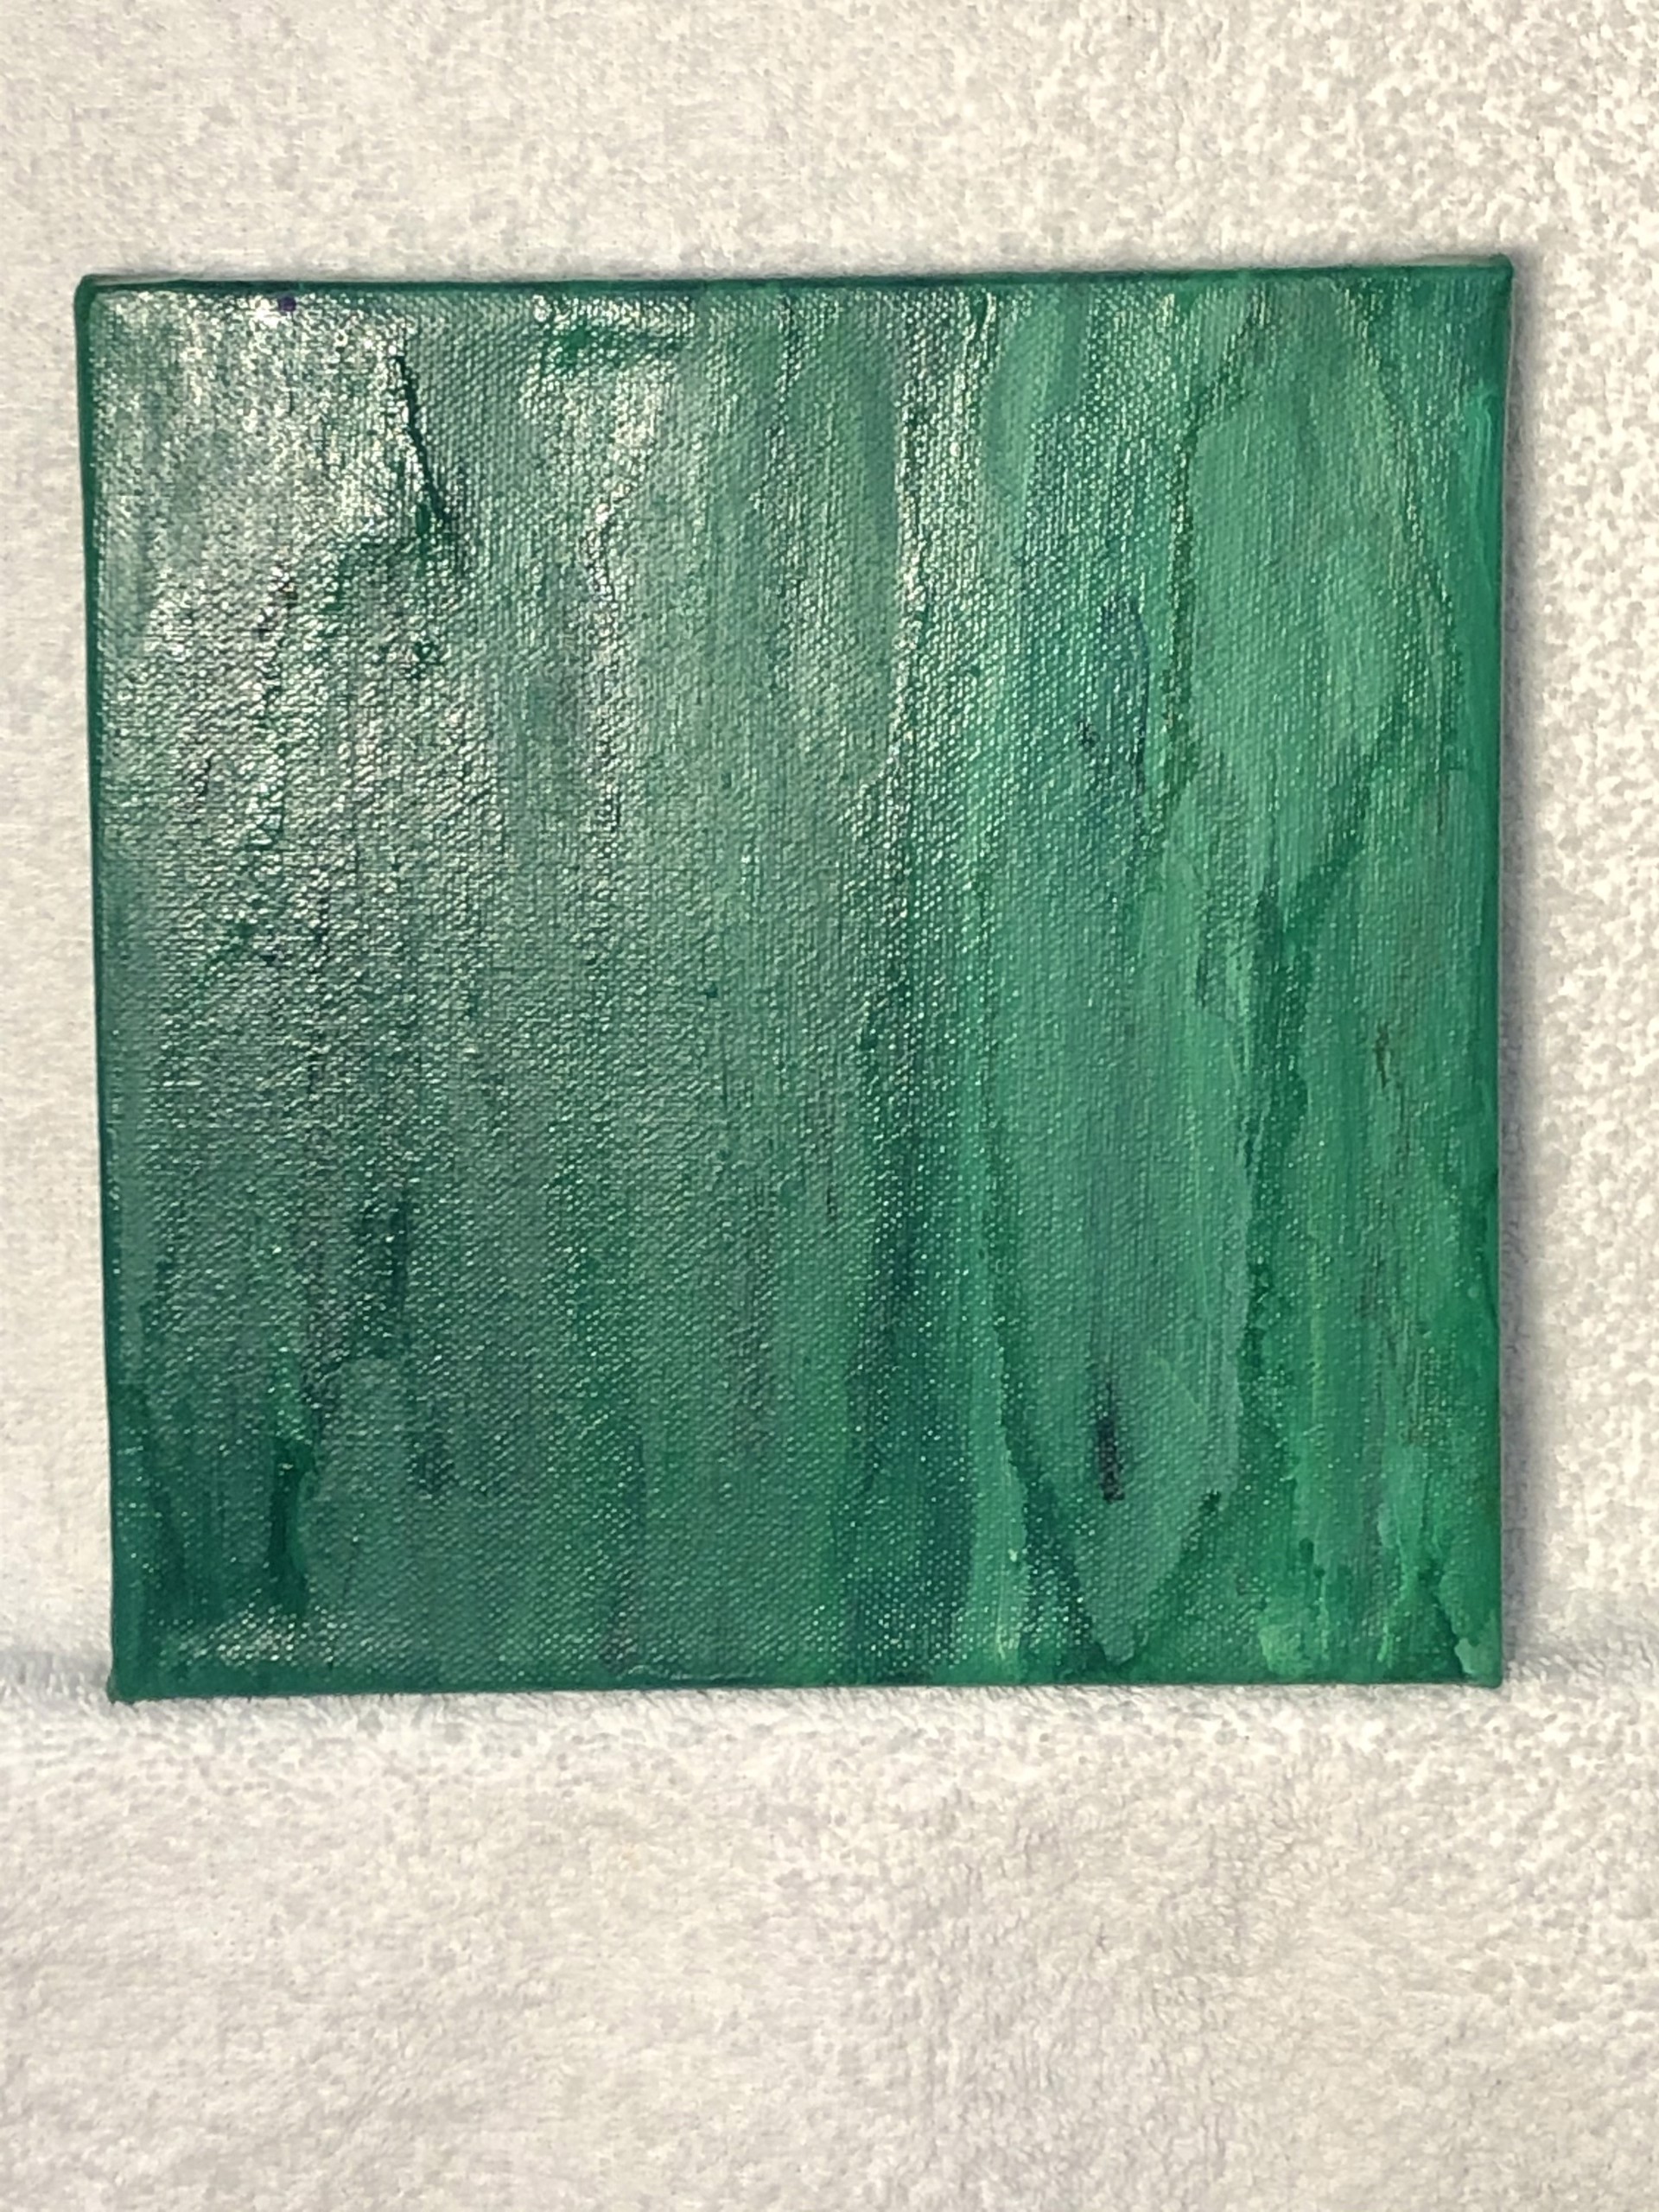 Emerald wood by Patricia Llovera